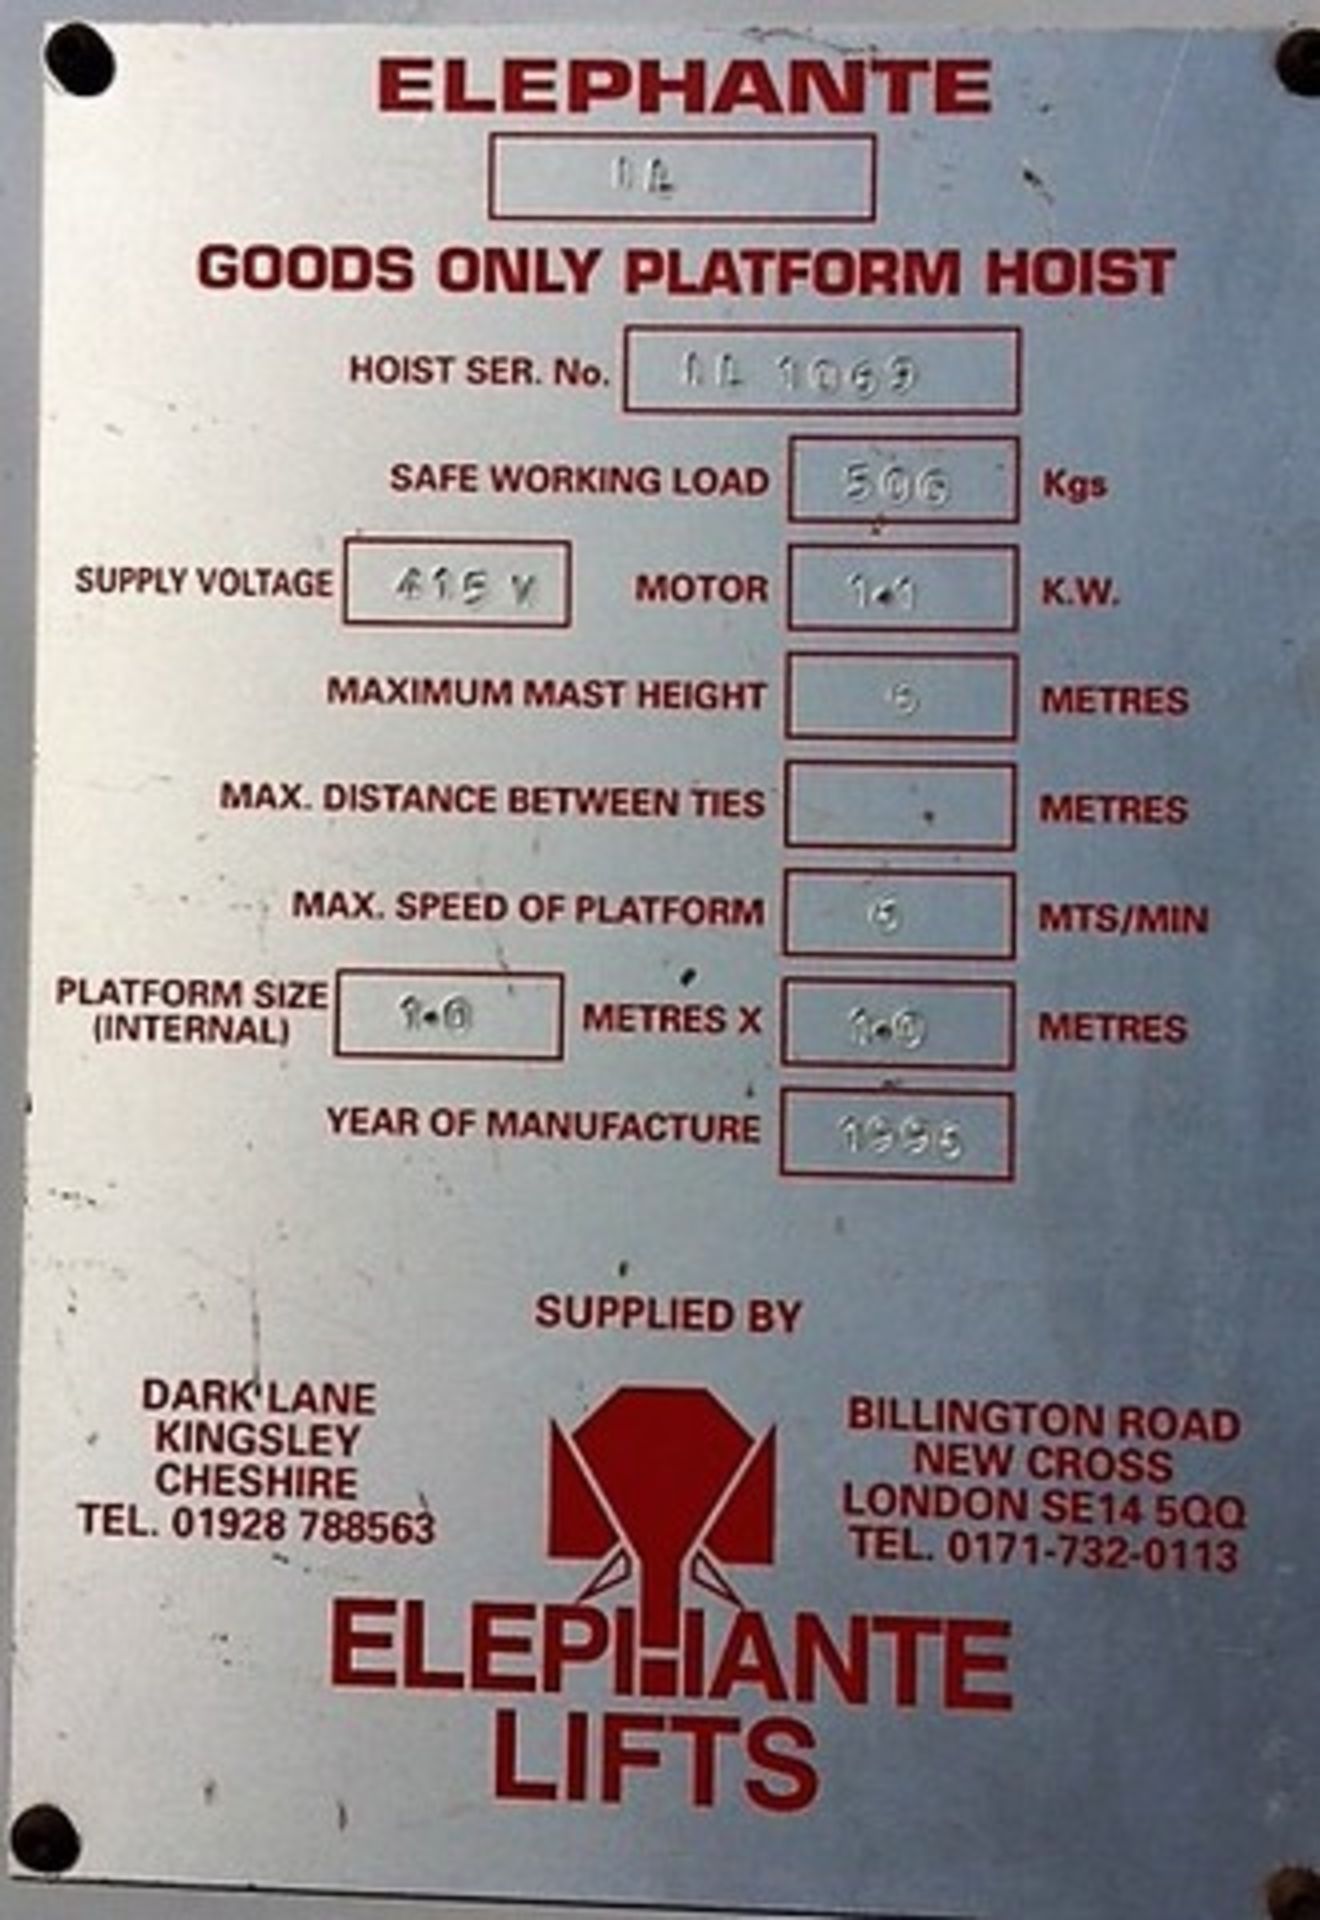 1996 ELEPHANTE goods only lift. Safe working load 500kg. S/N 1L1069. Supply voltage 415. Max mast he - Bild 3 aus 5